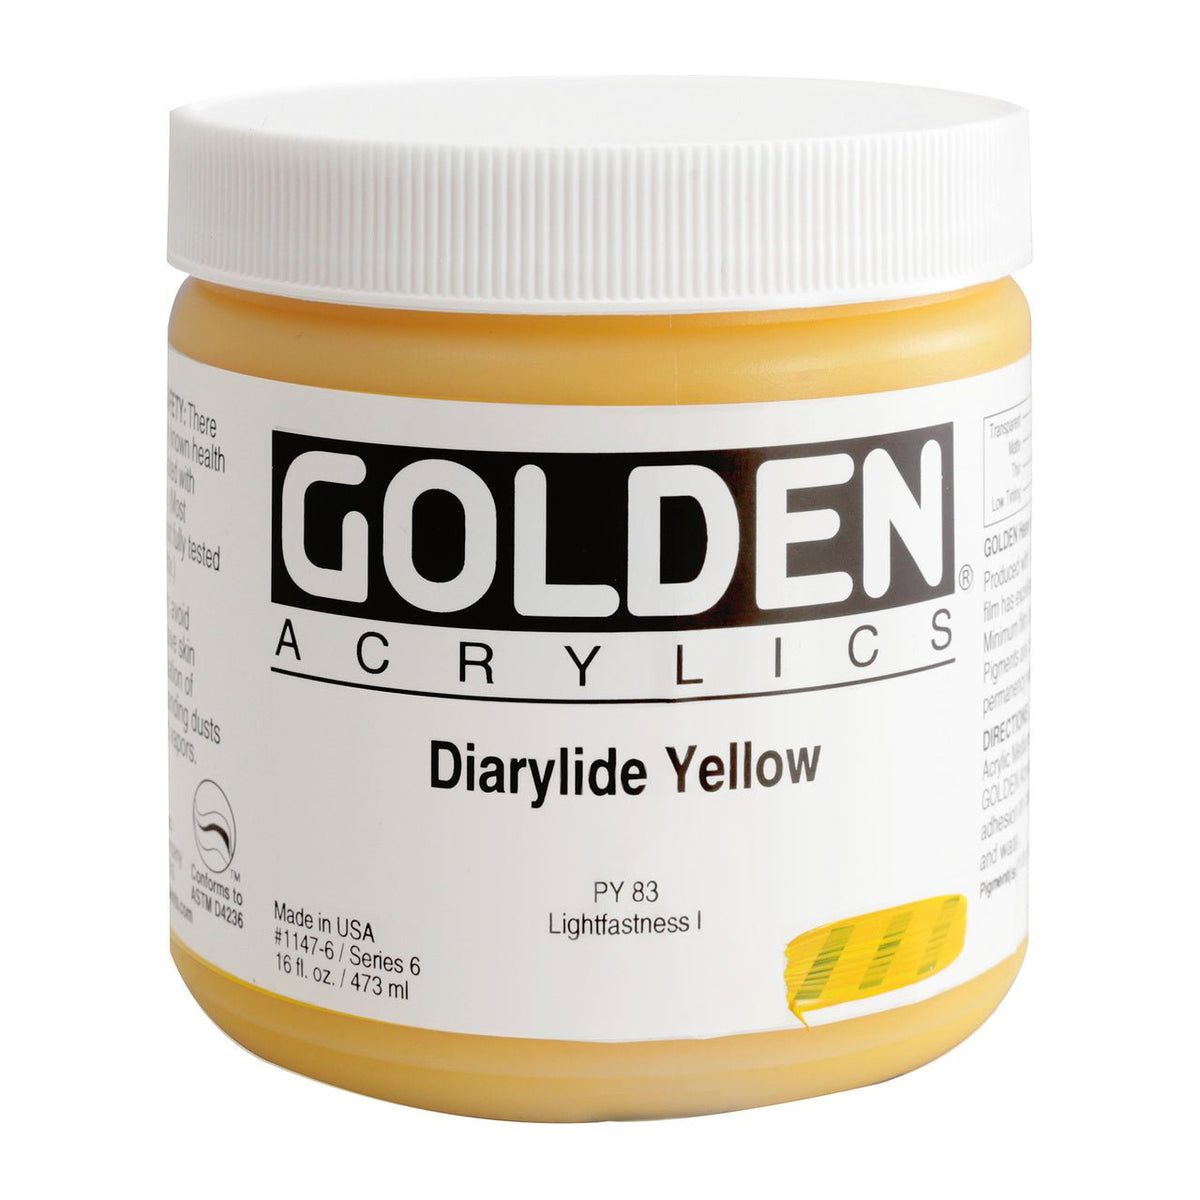 Golden Heavy Body Acrylic Diarylide Yellow 16 oz - merriartist.com